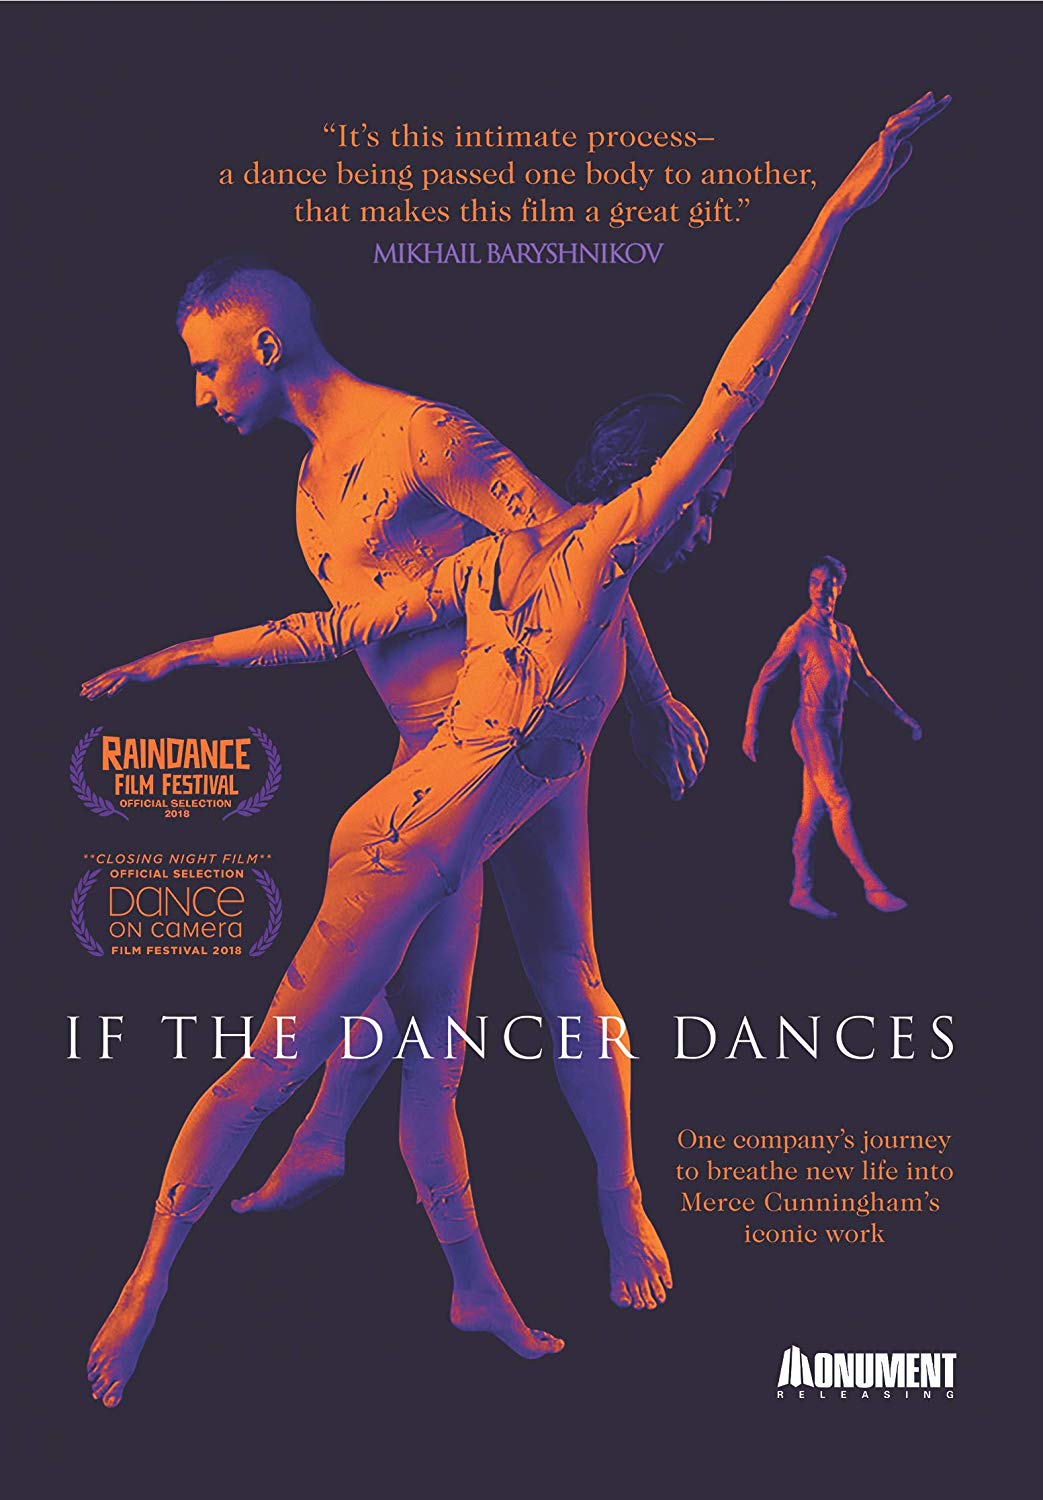 If the Dancer Dances cover art